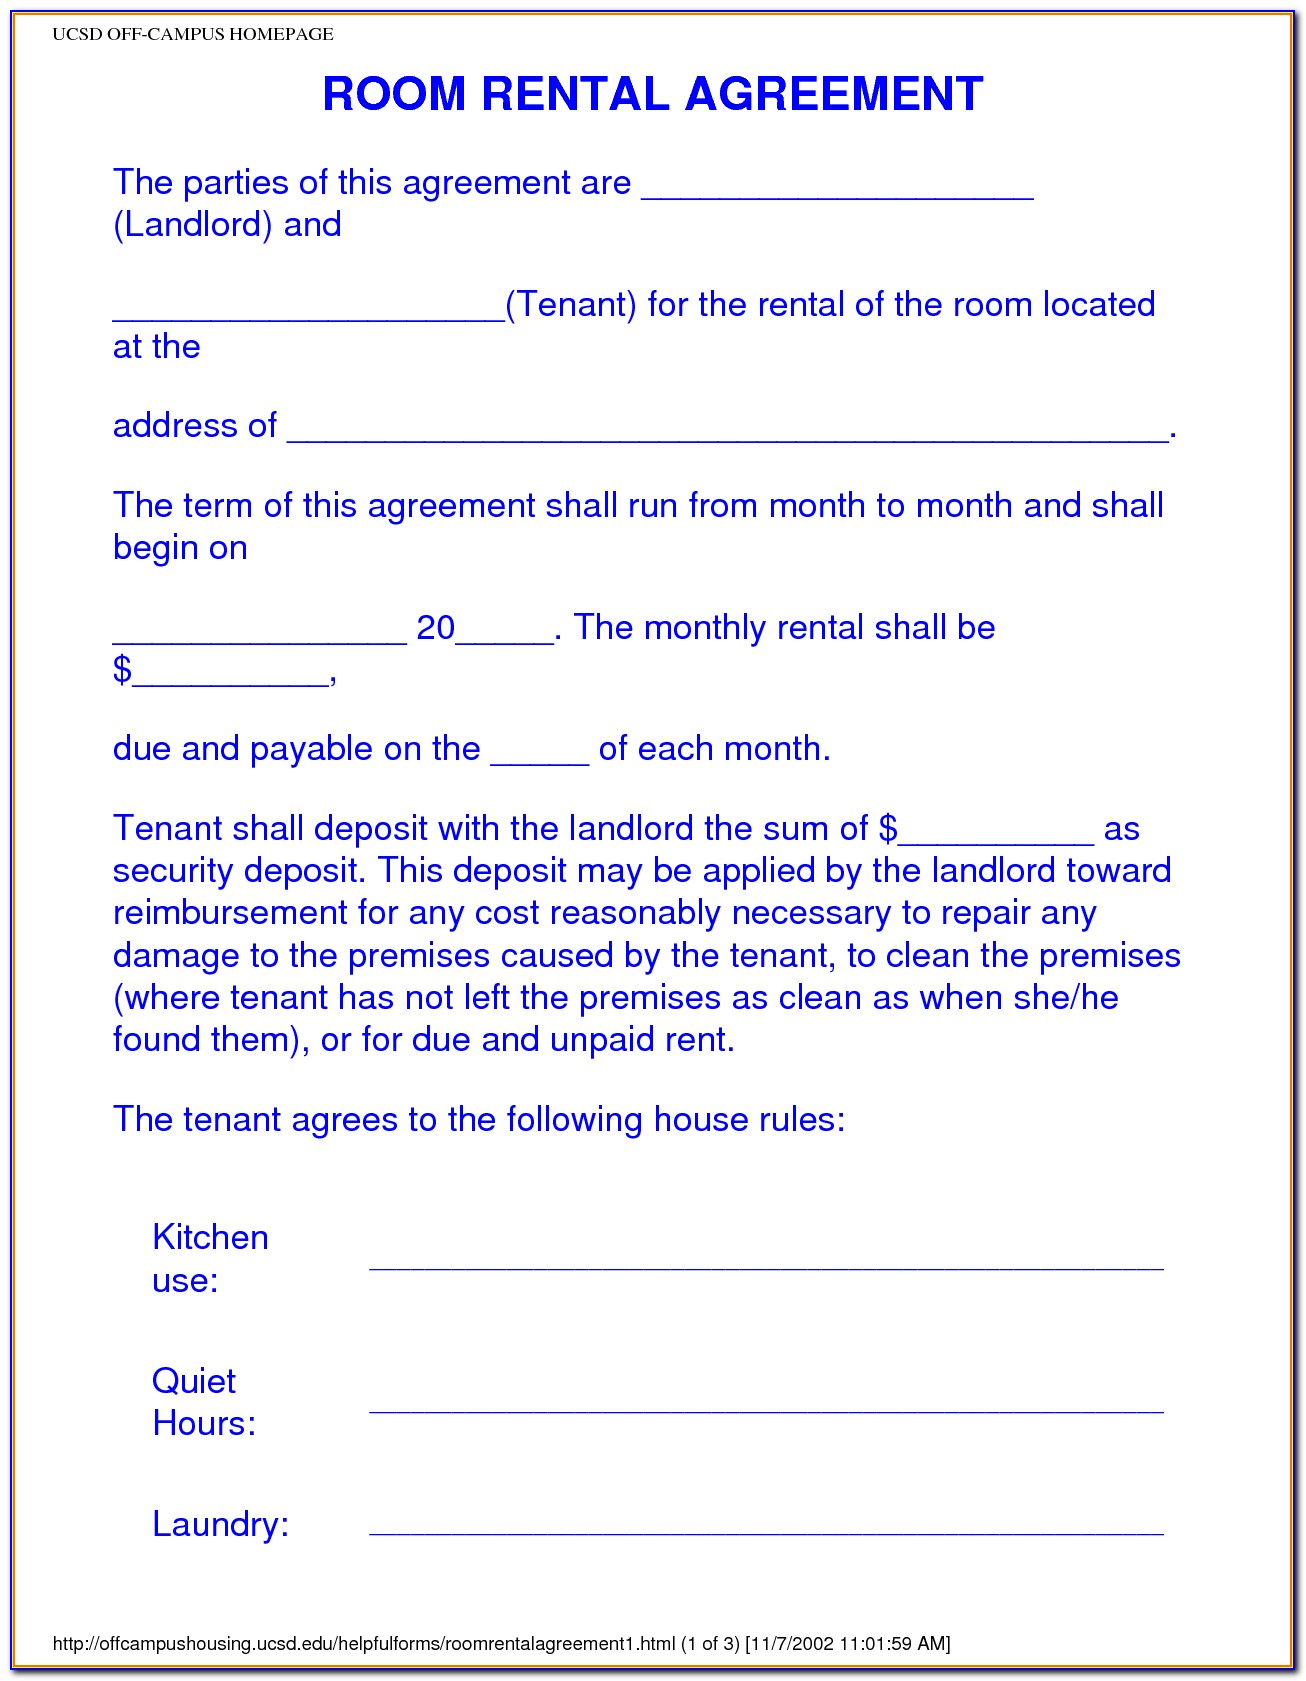 Free Room Rental Agreement Template Uk